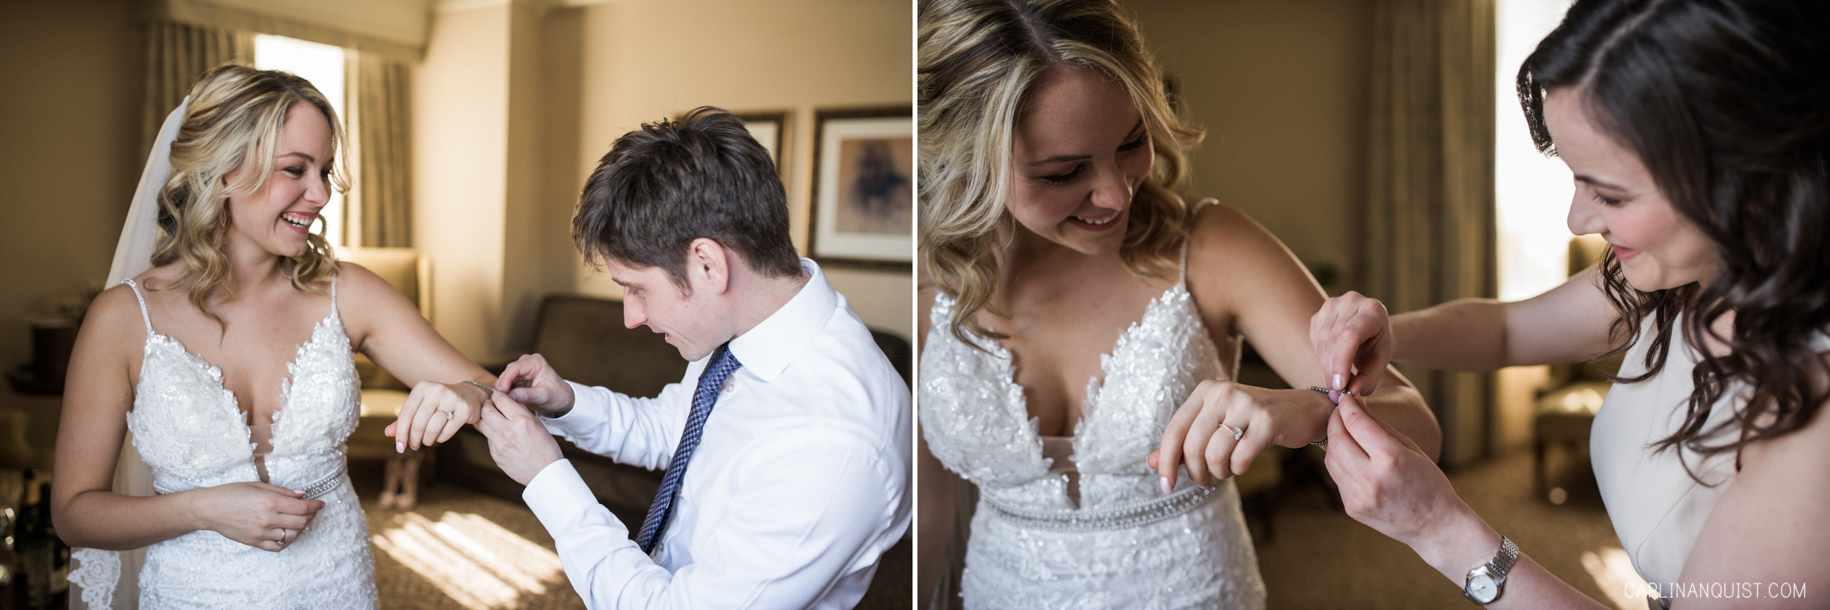 Bride Getting Ready | Banff Springs Hotel Wedding Photographer